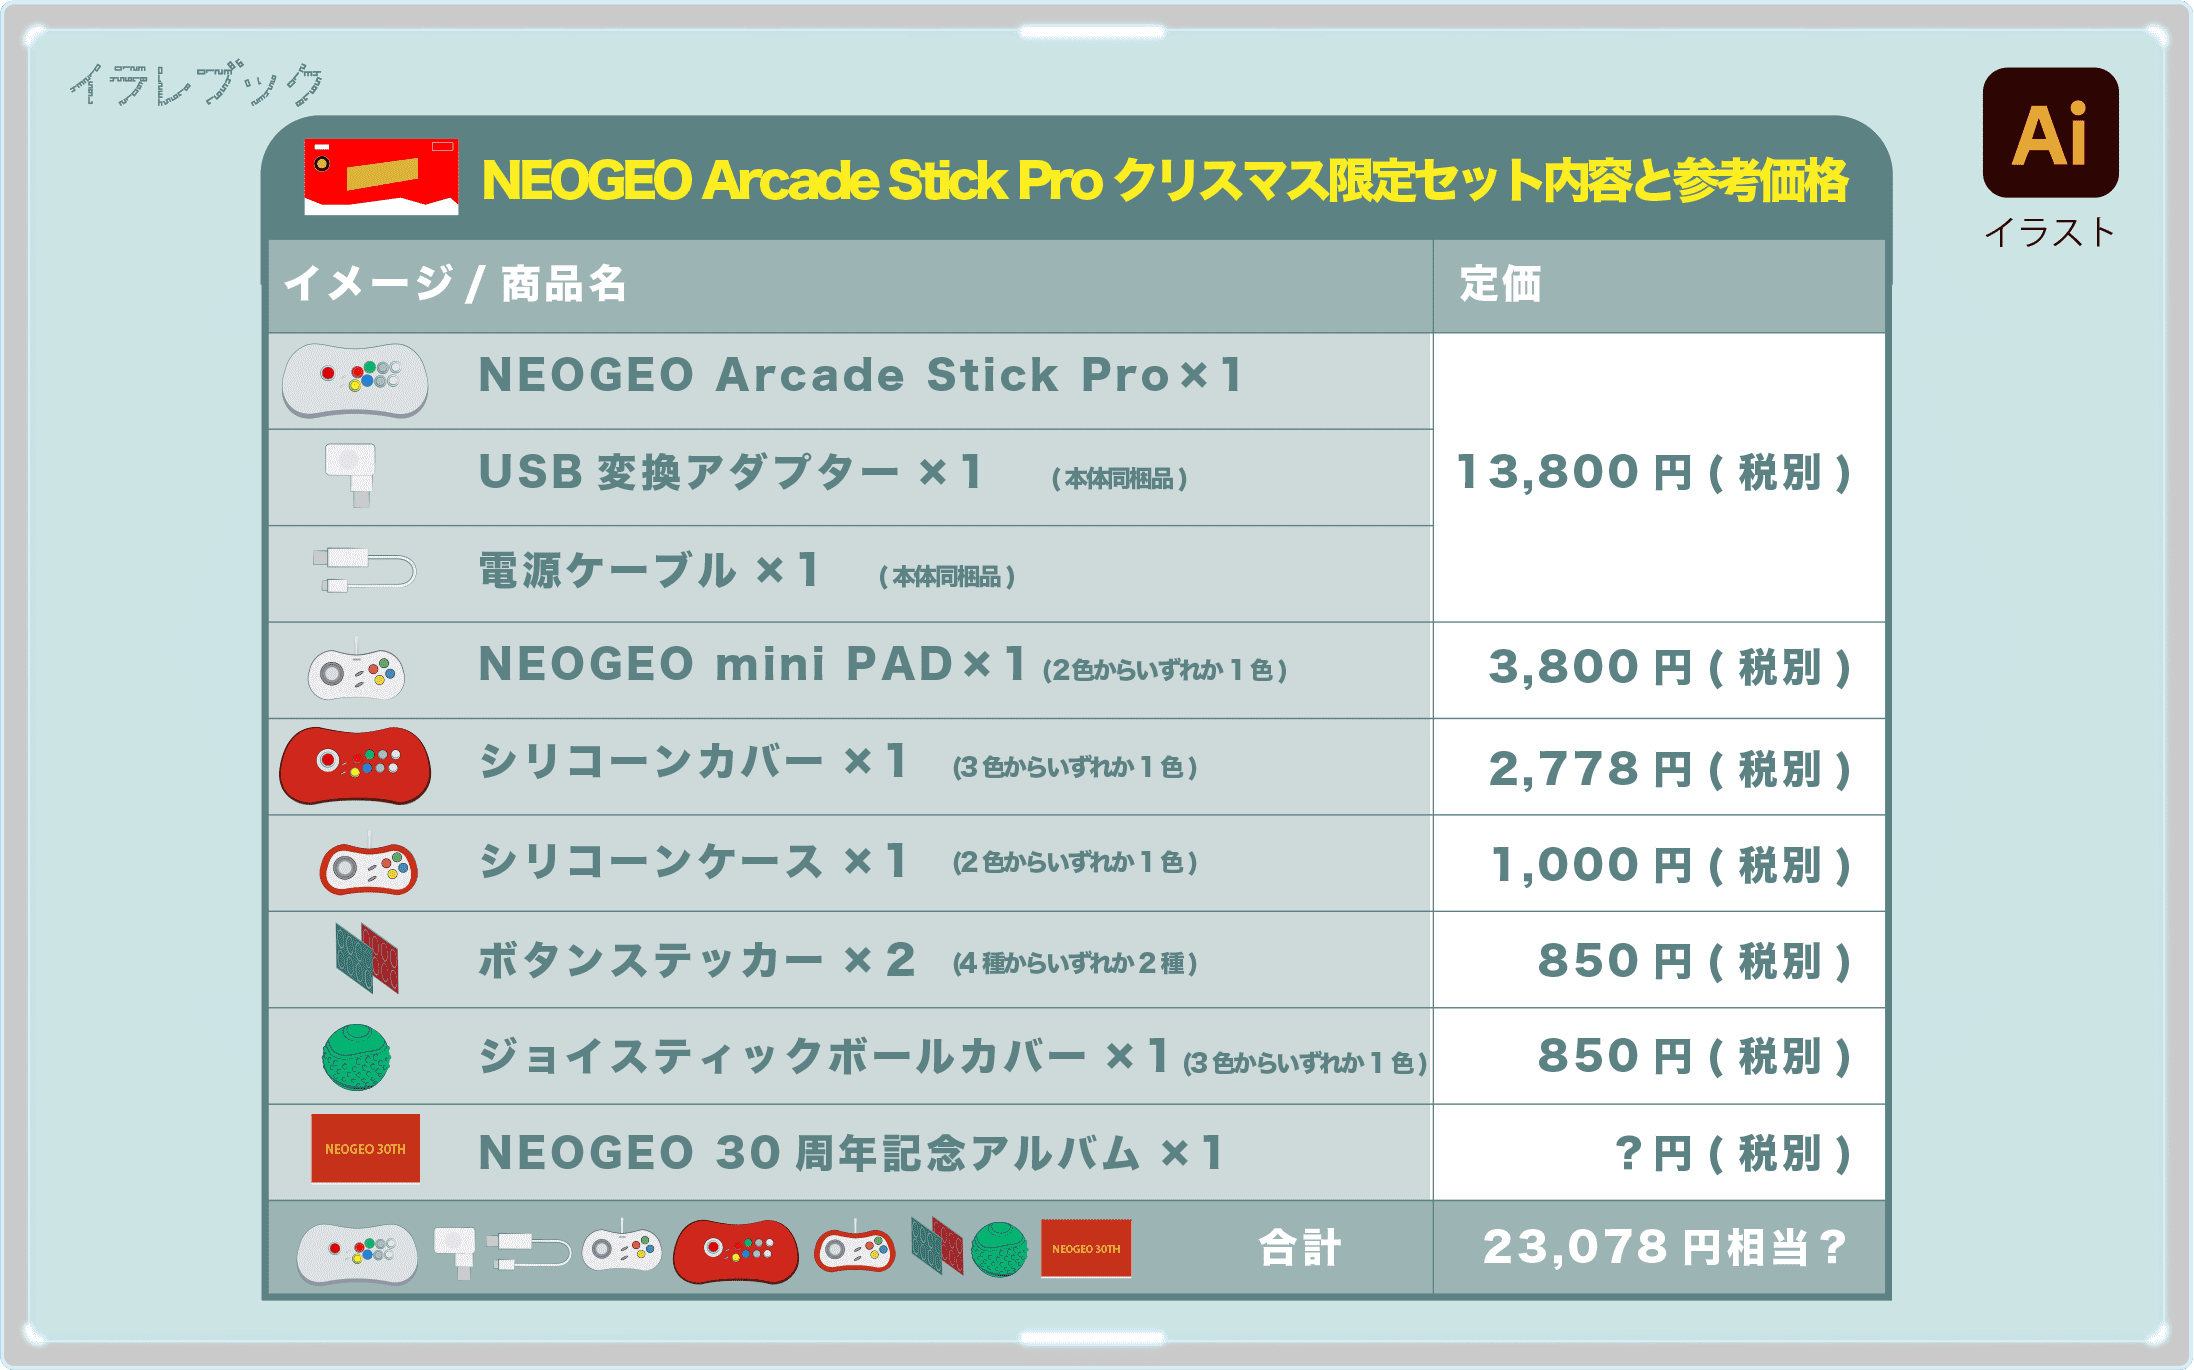 NEOGEO Arcade Stick Pro クリスマス限定セットの内容と価格一覧表